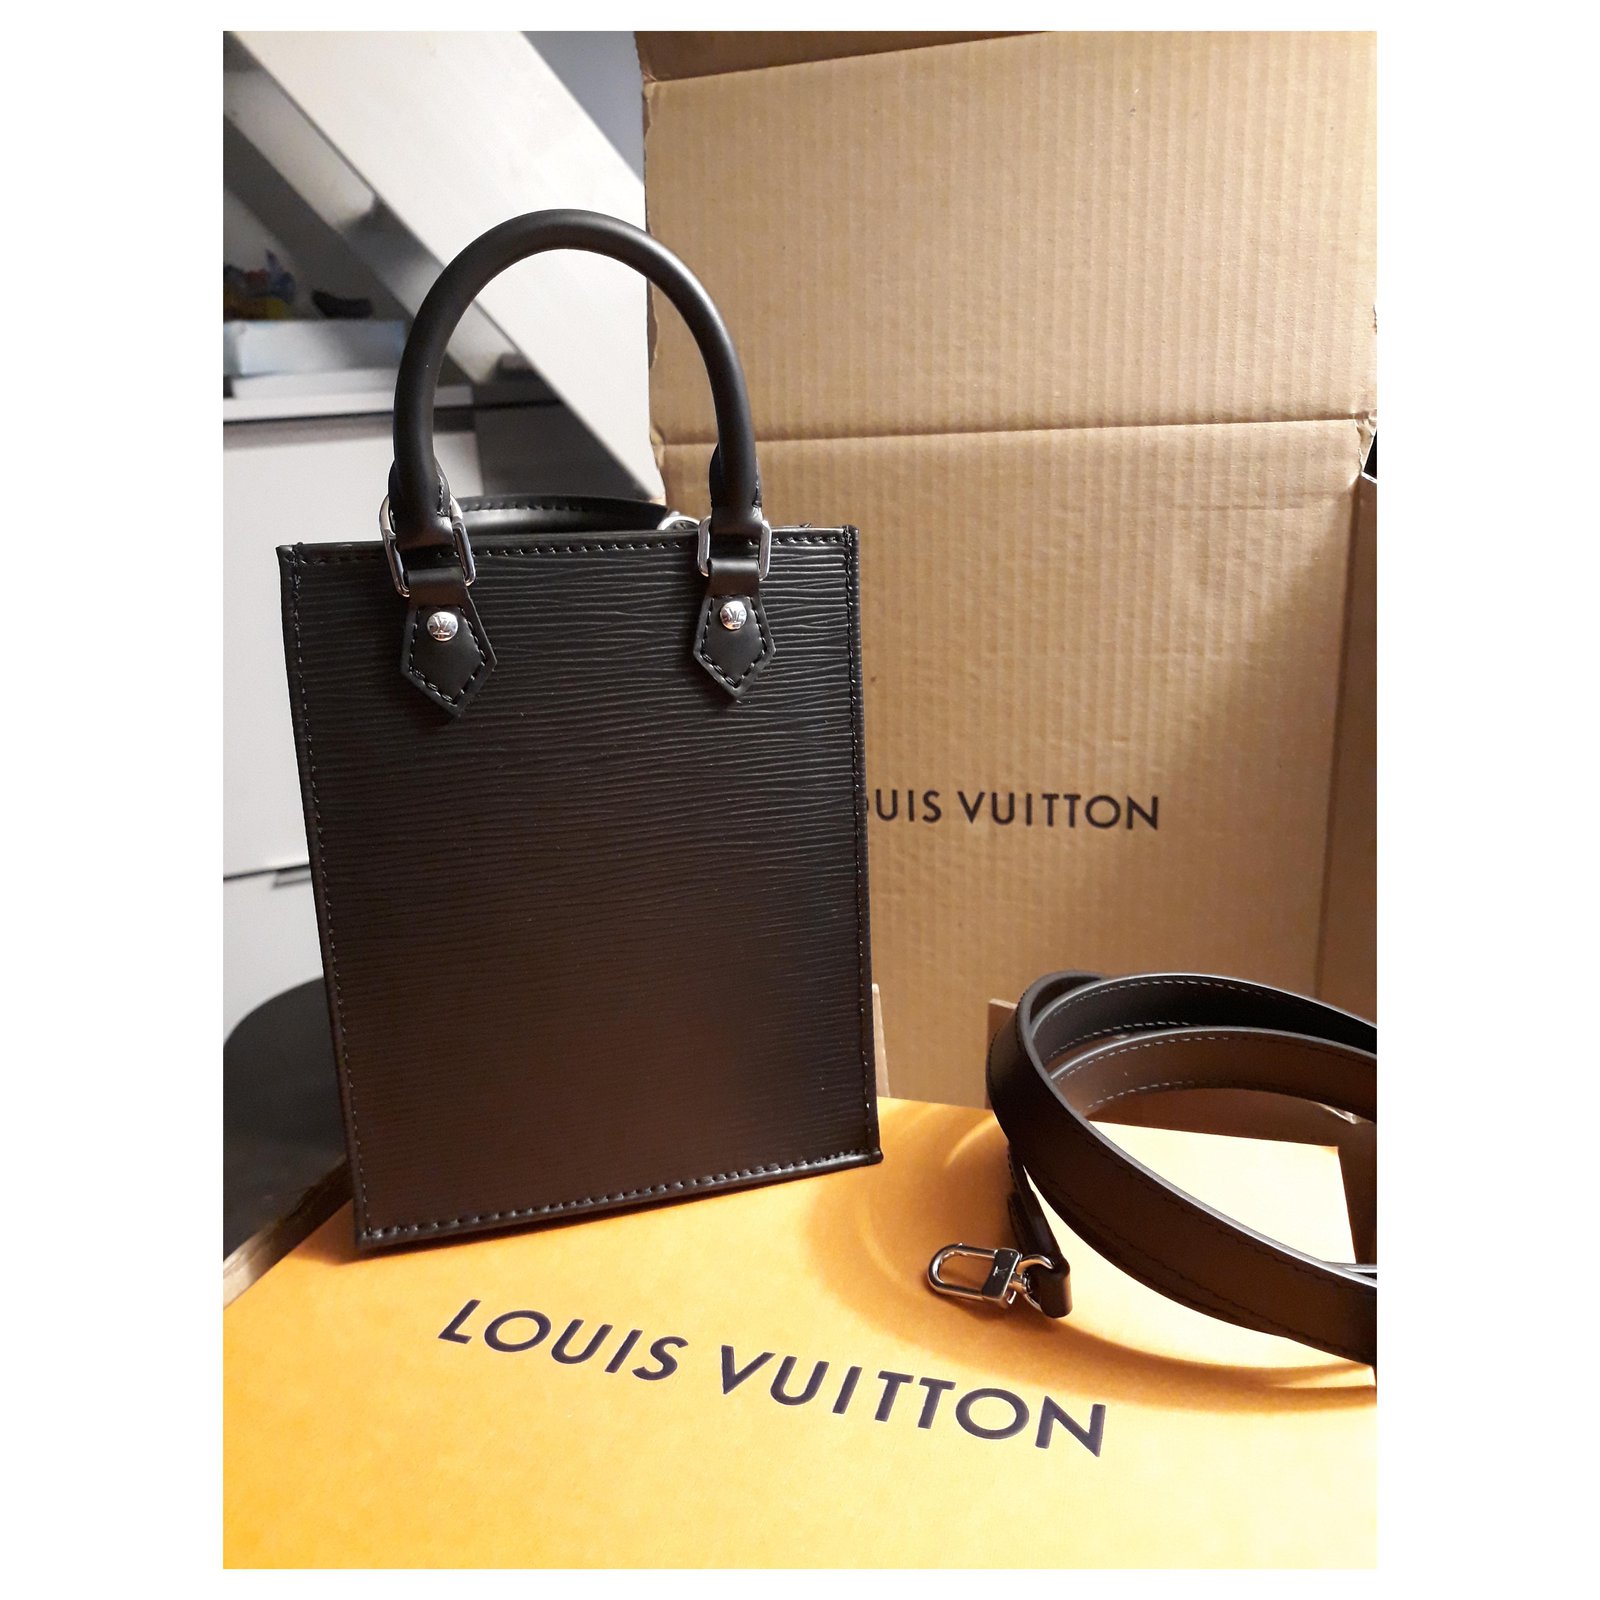 Sac Plat Nano Louis Vuitton cuir épi noir